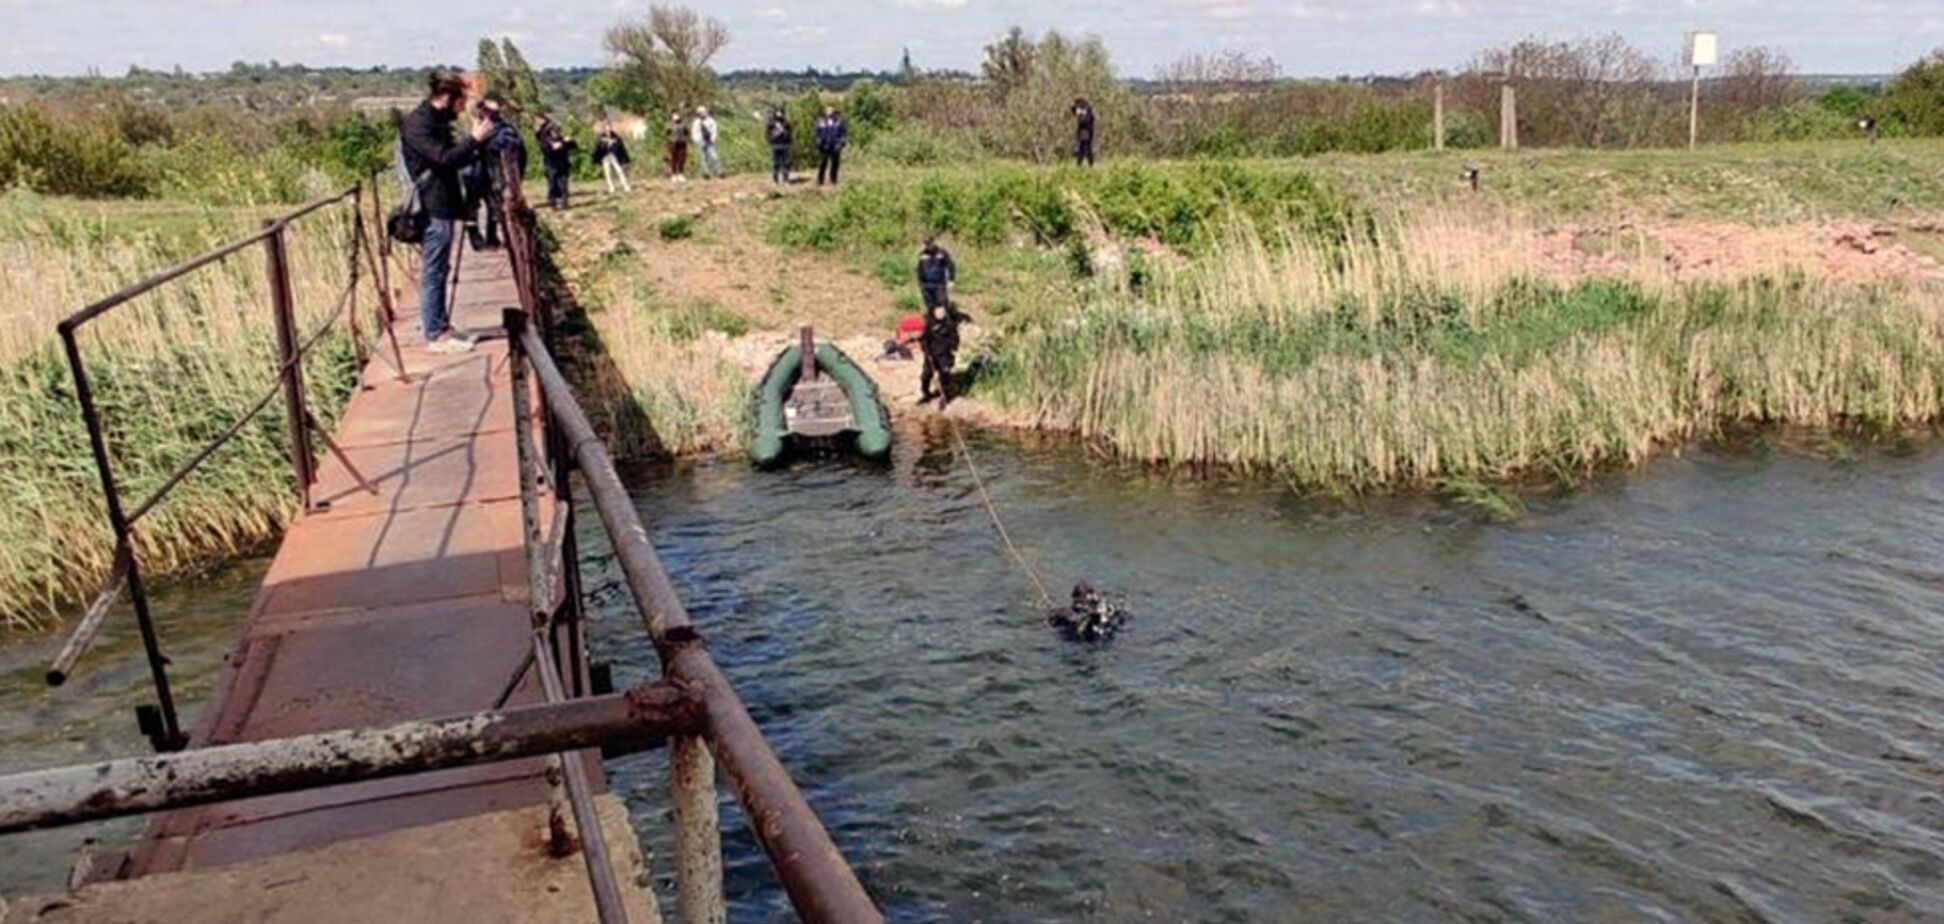 Тело утонувшего мальчика нашли на дне реки под Днепром